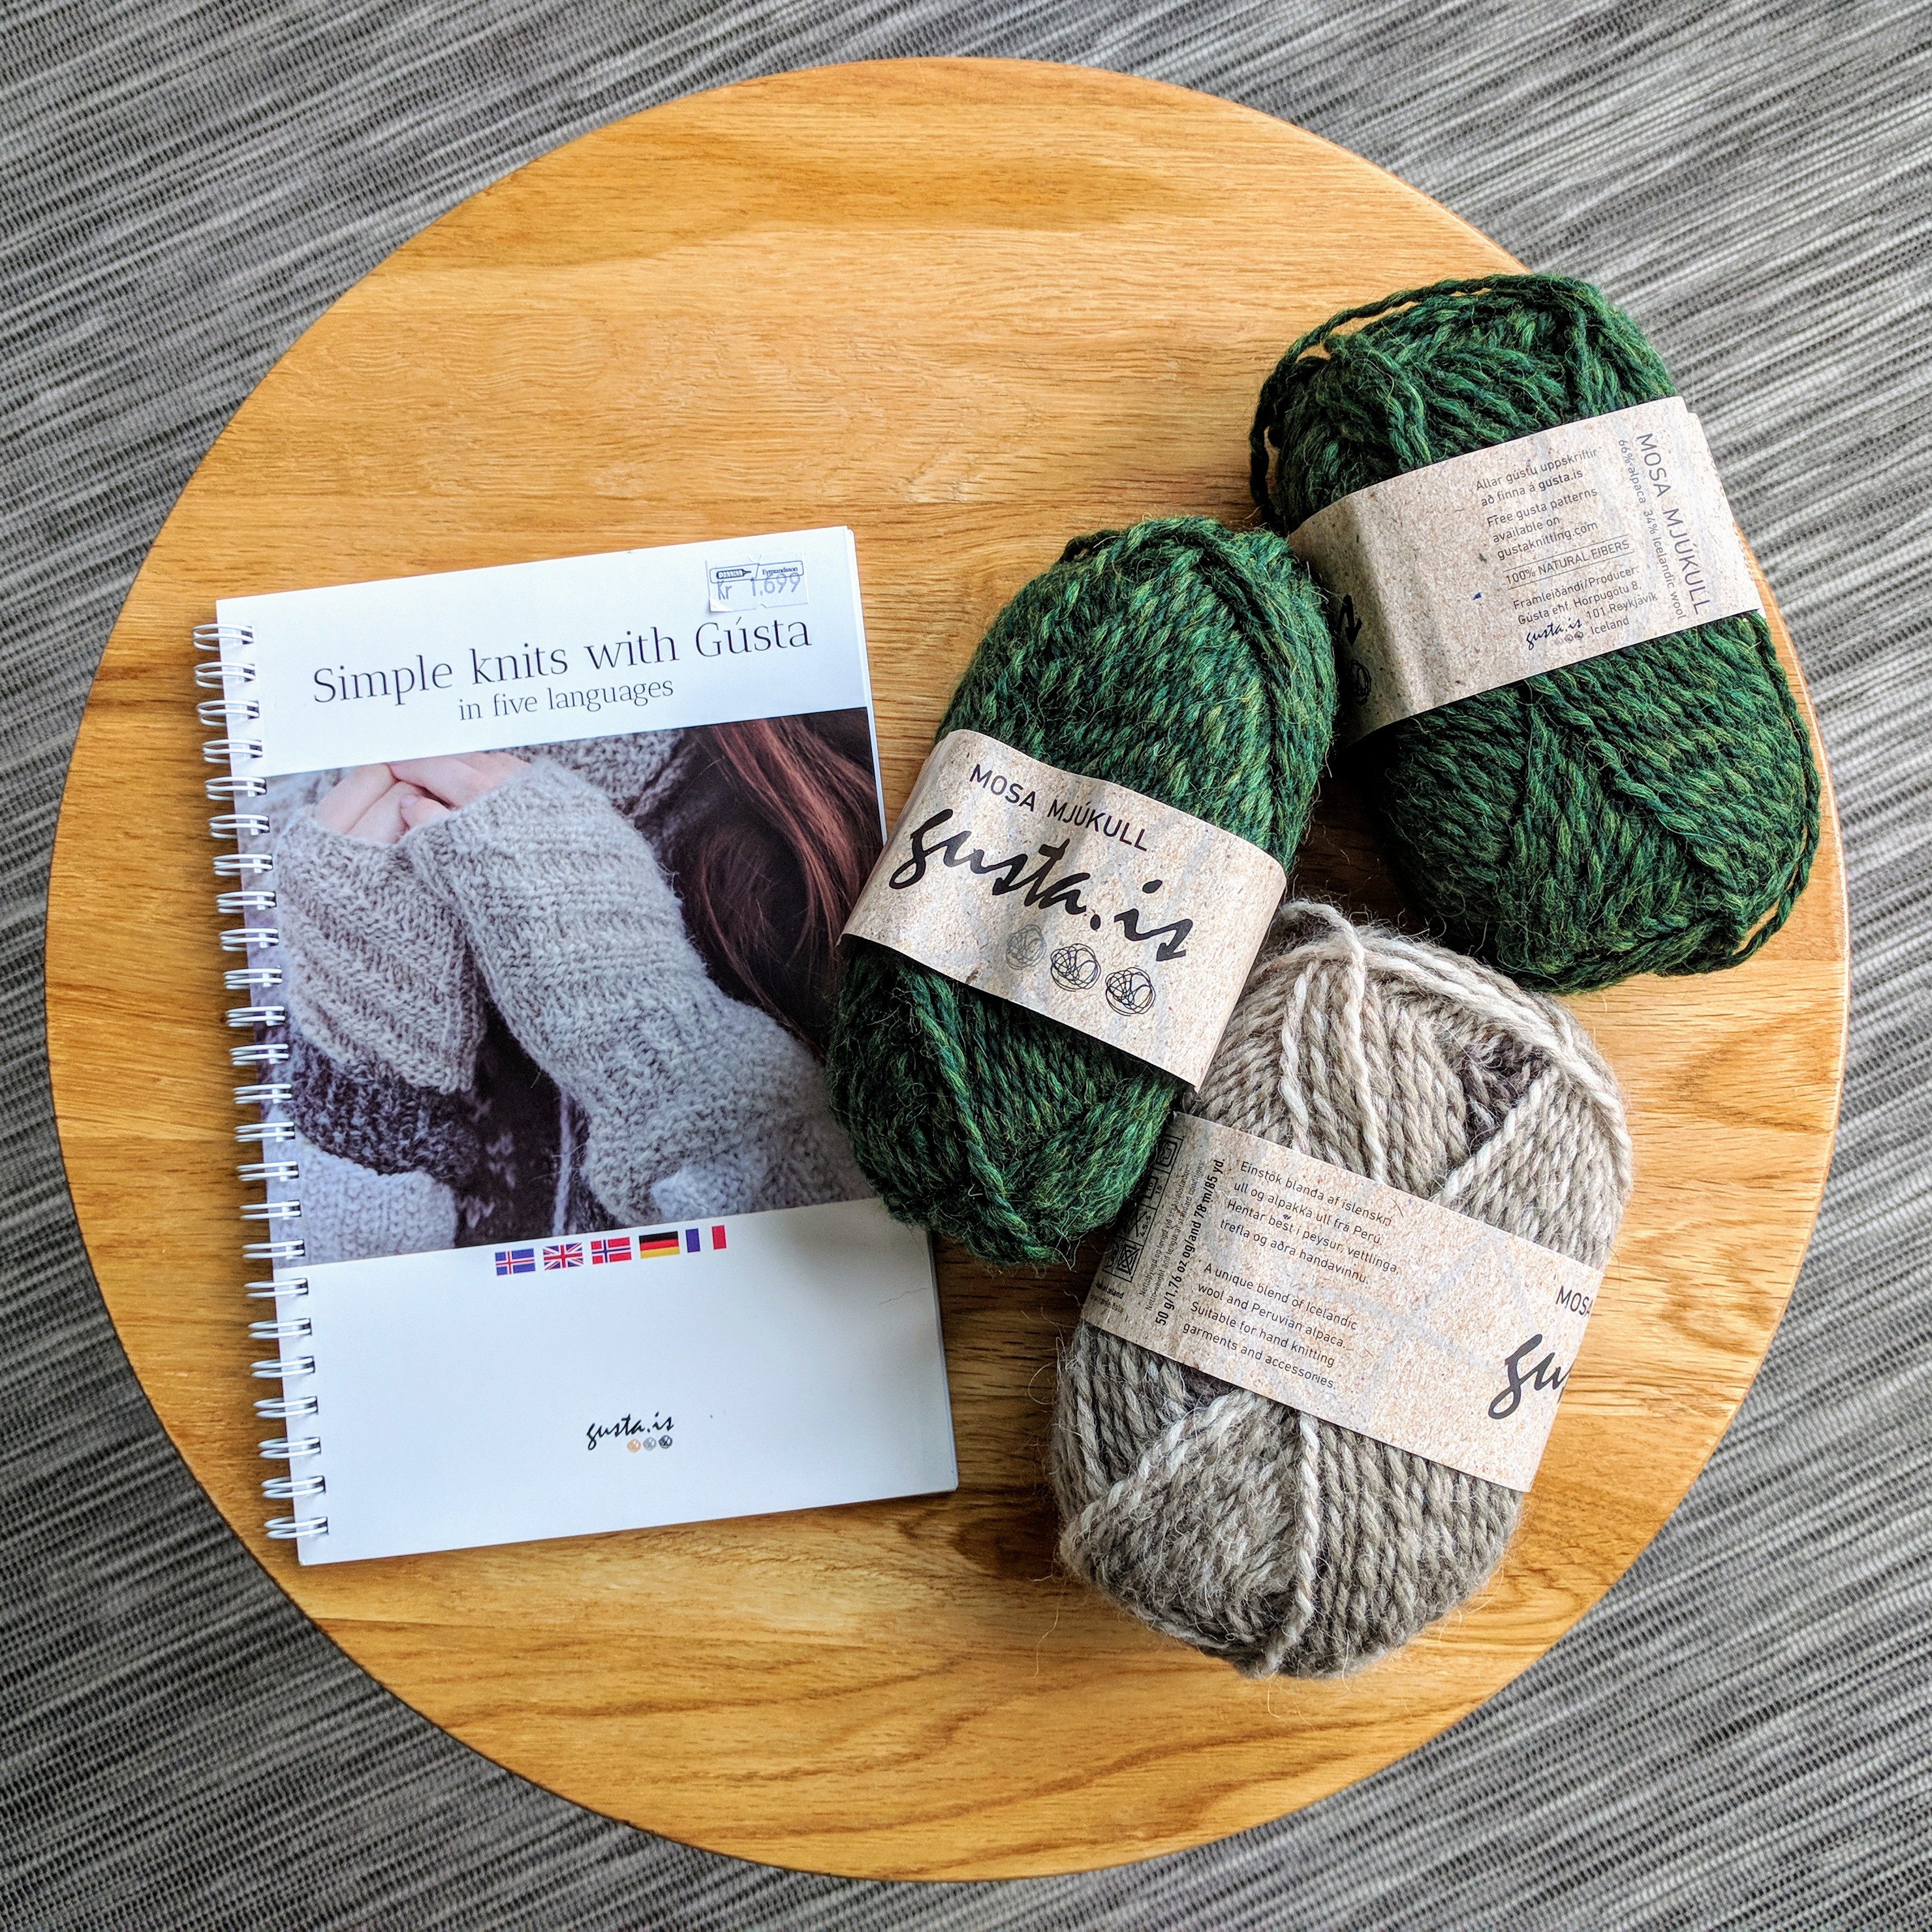 Icelandic patterns and wool